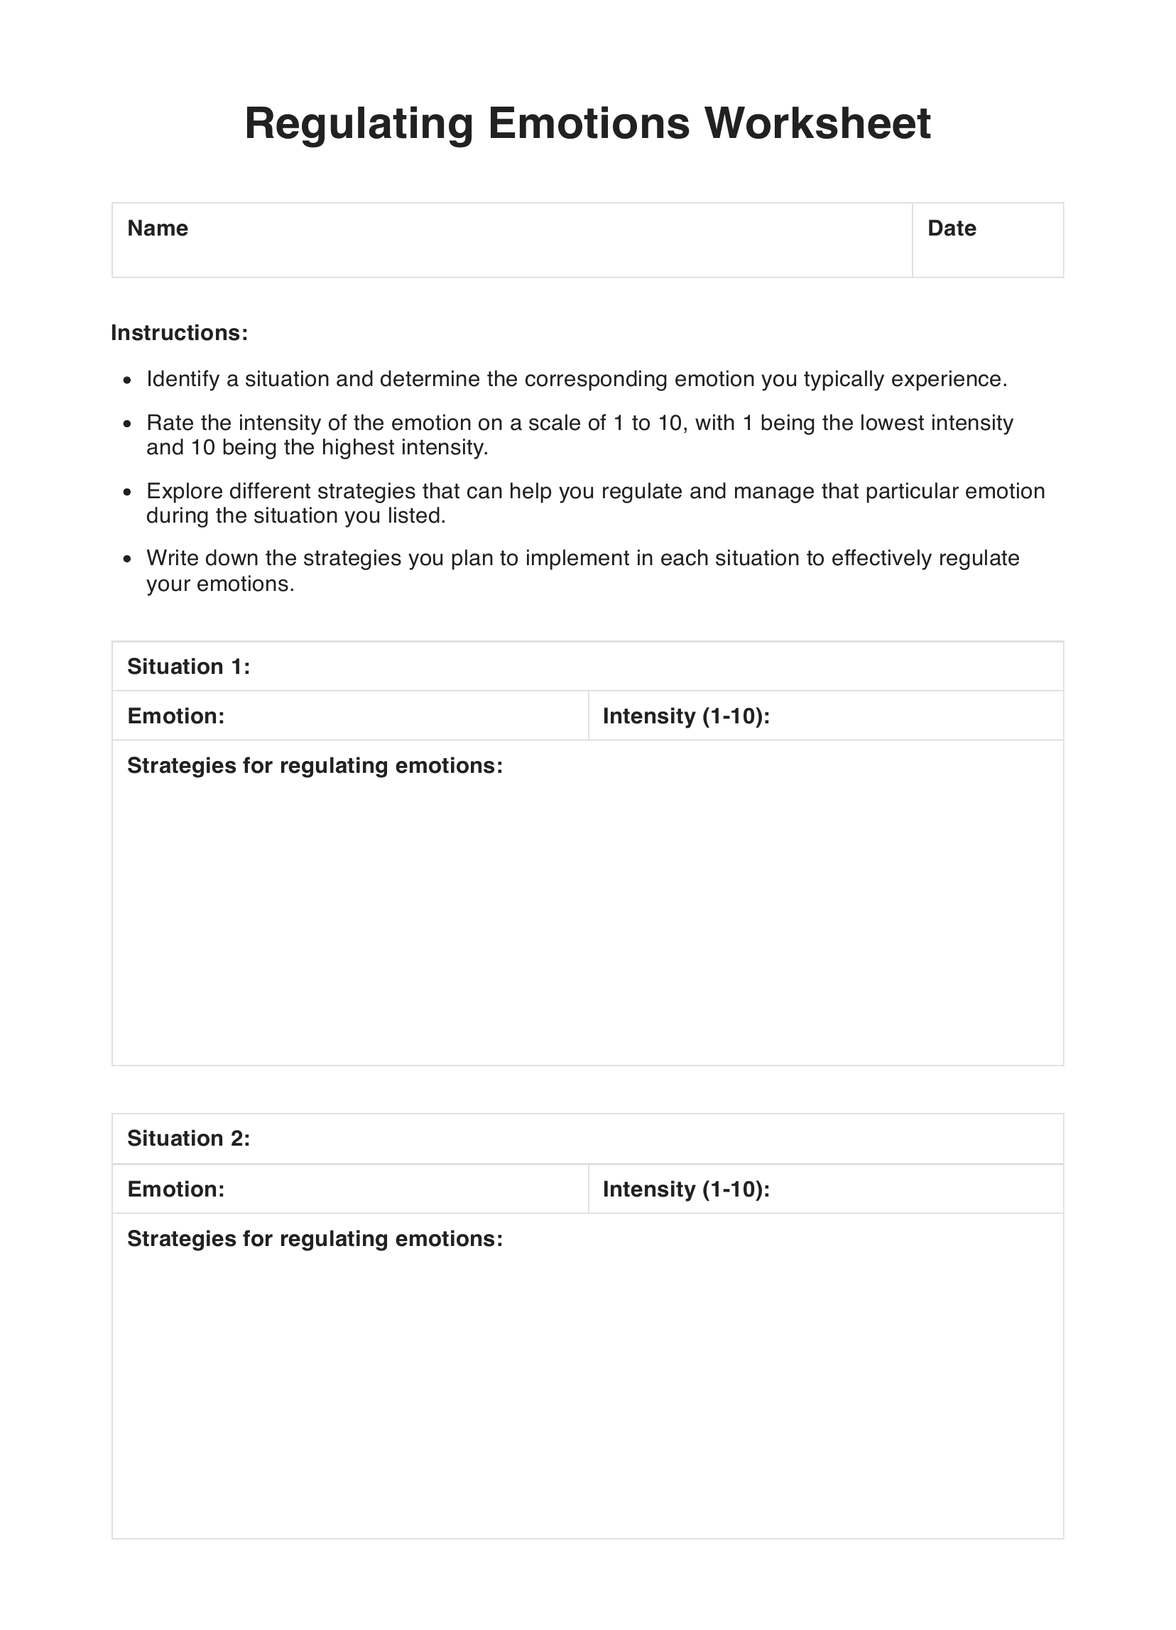 Regulating Emotions Worksheets PDF Example